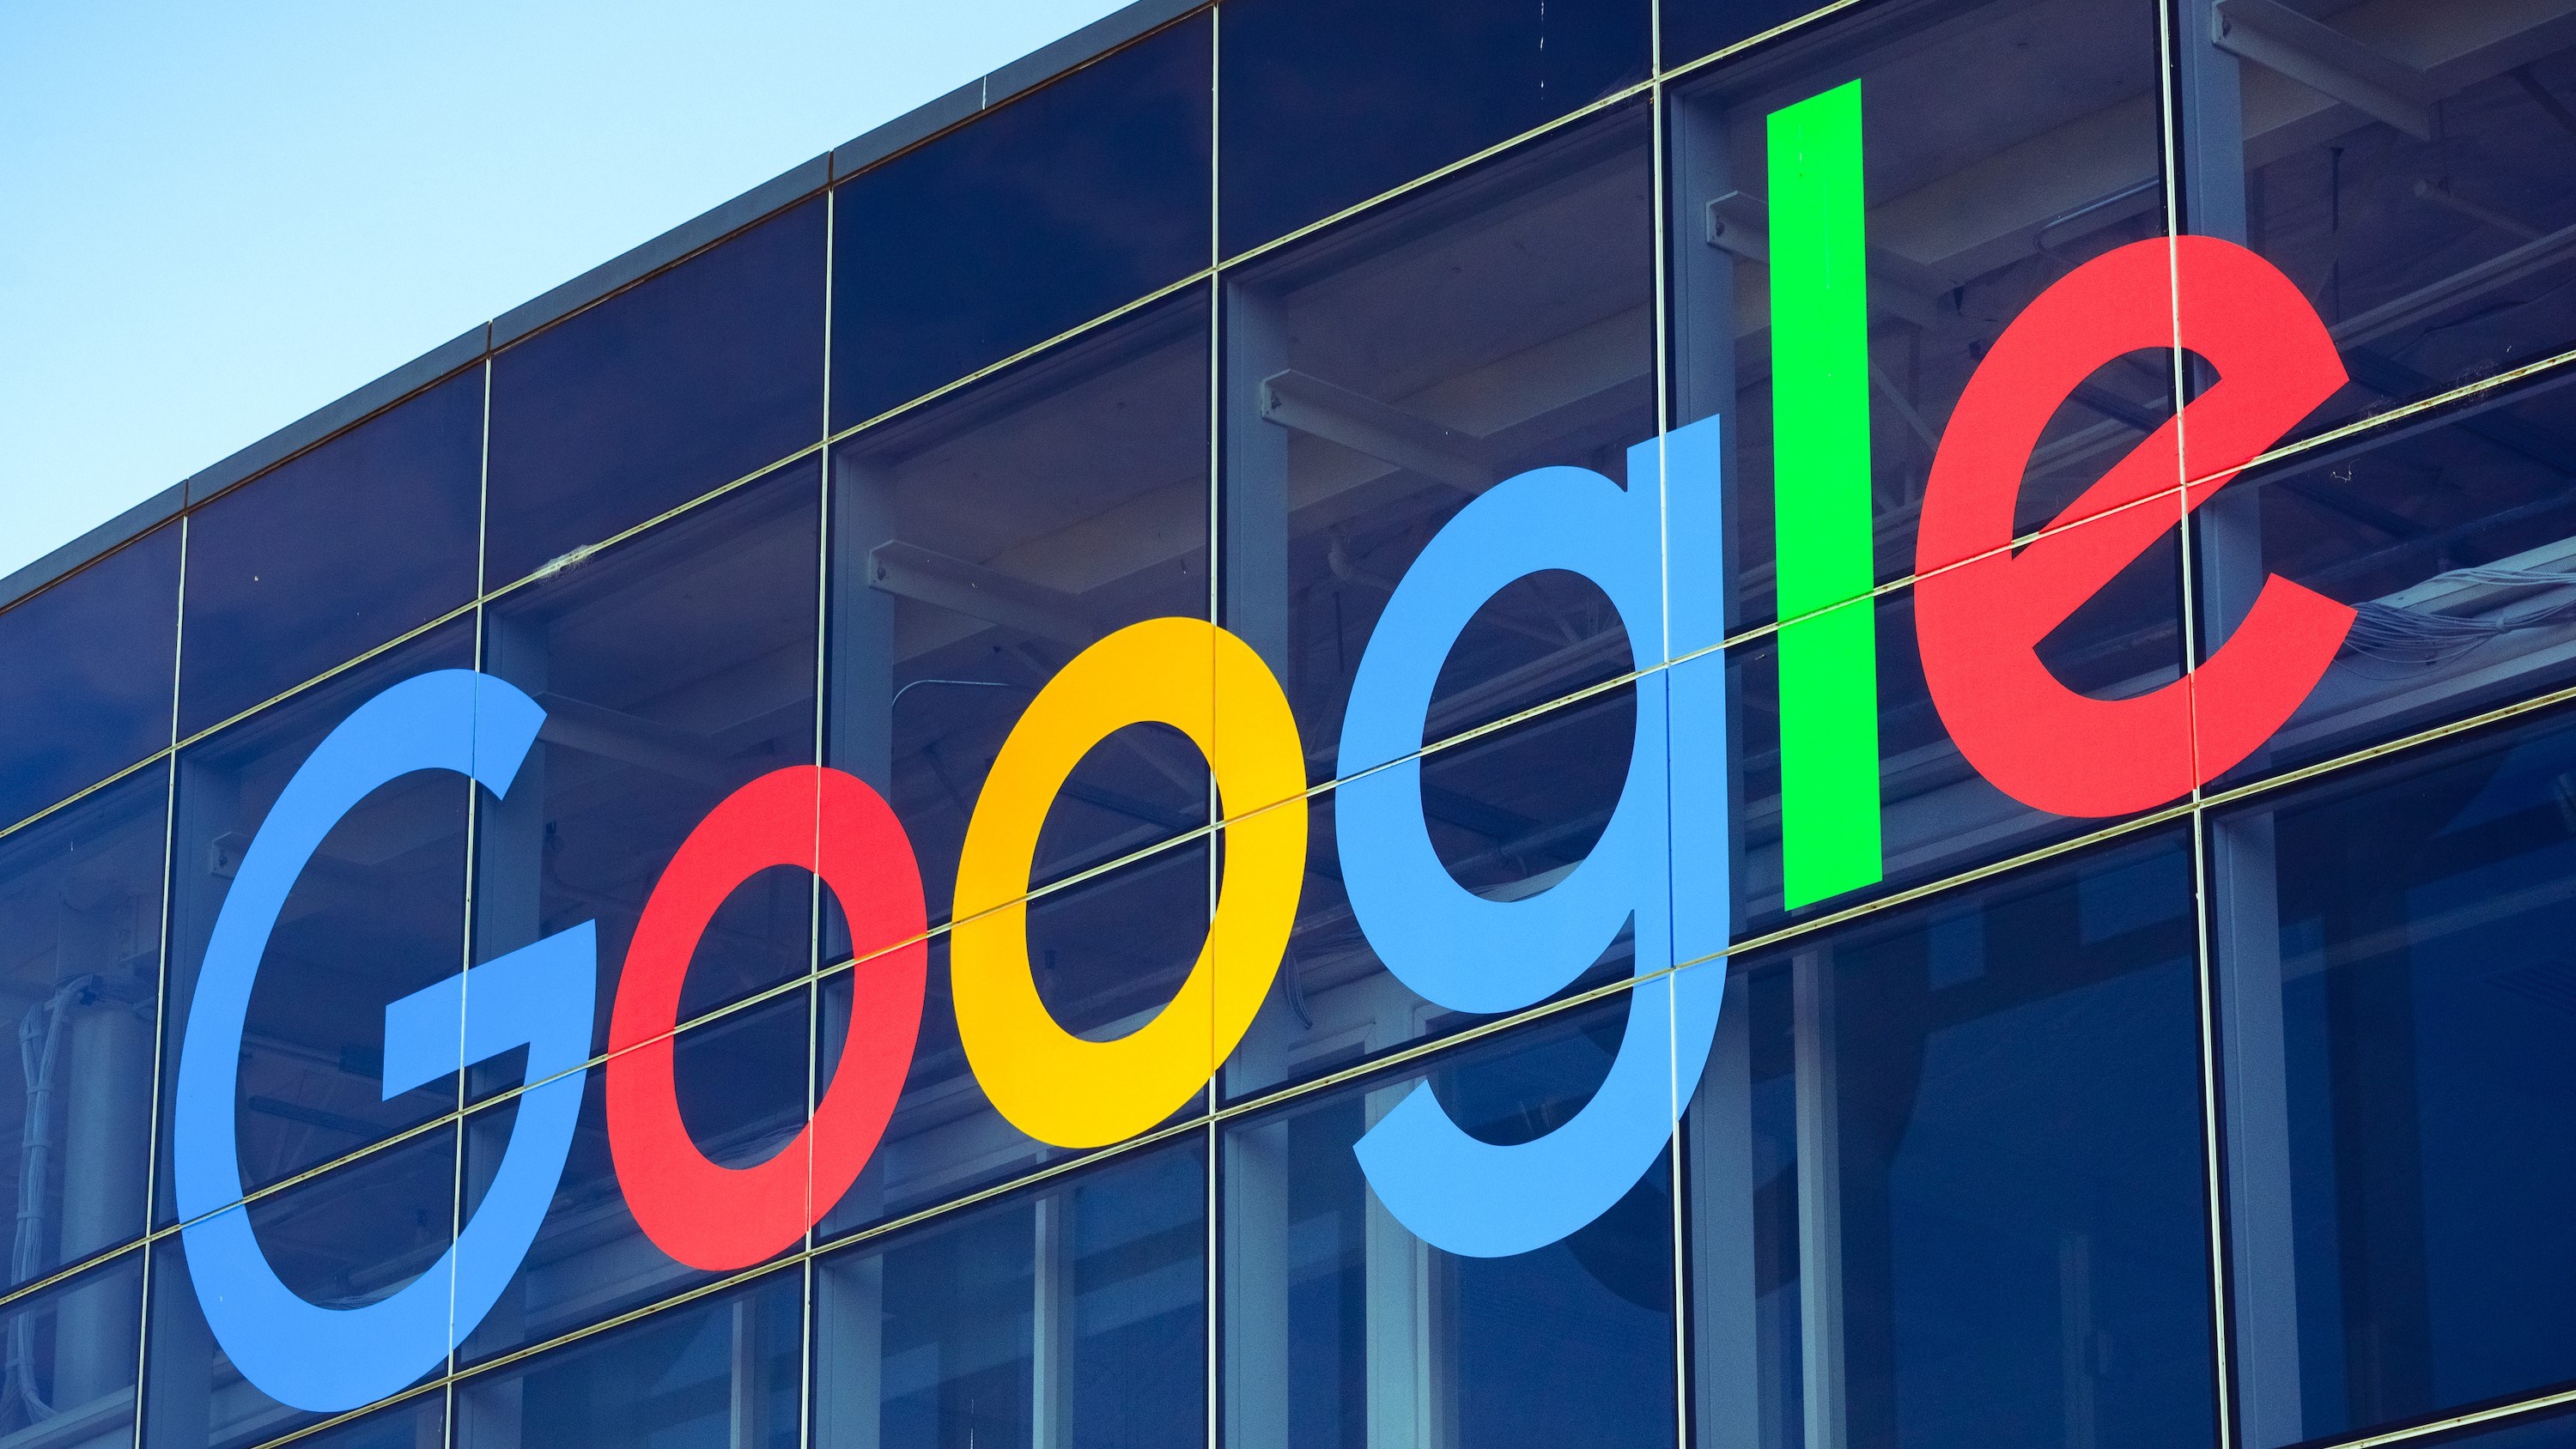 Google logo on the building